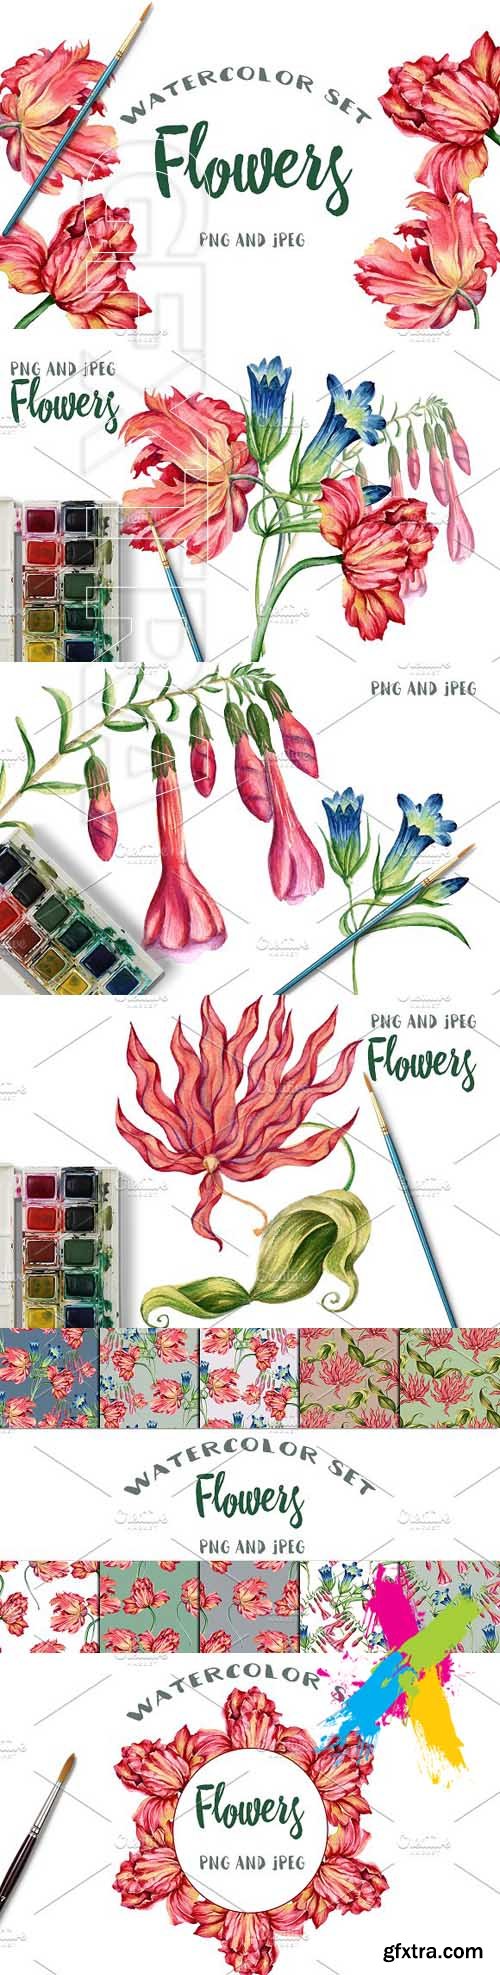 CM - Watercolor flowers 1491453